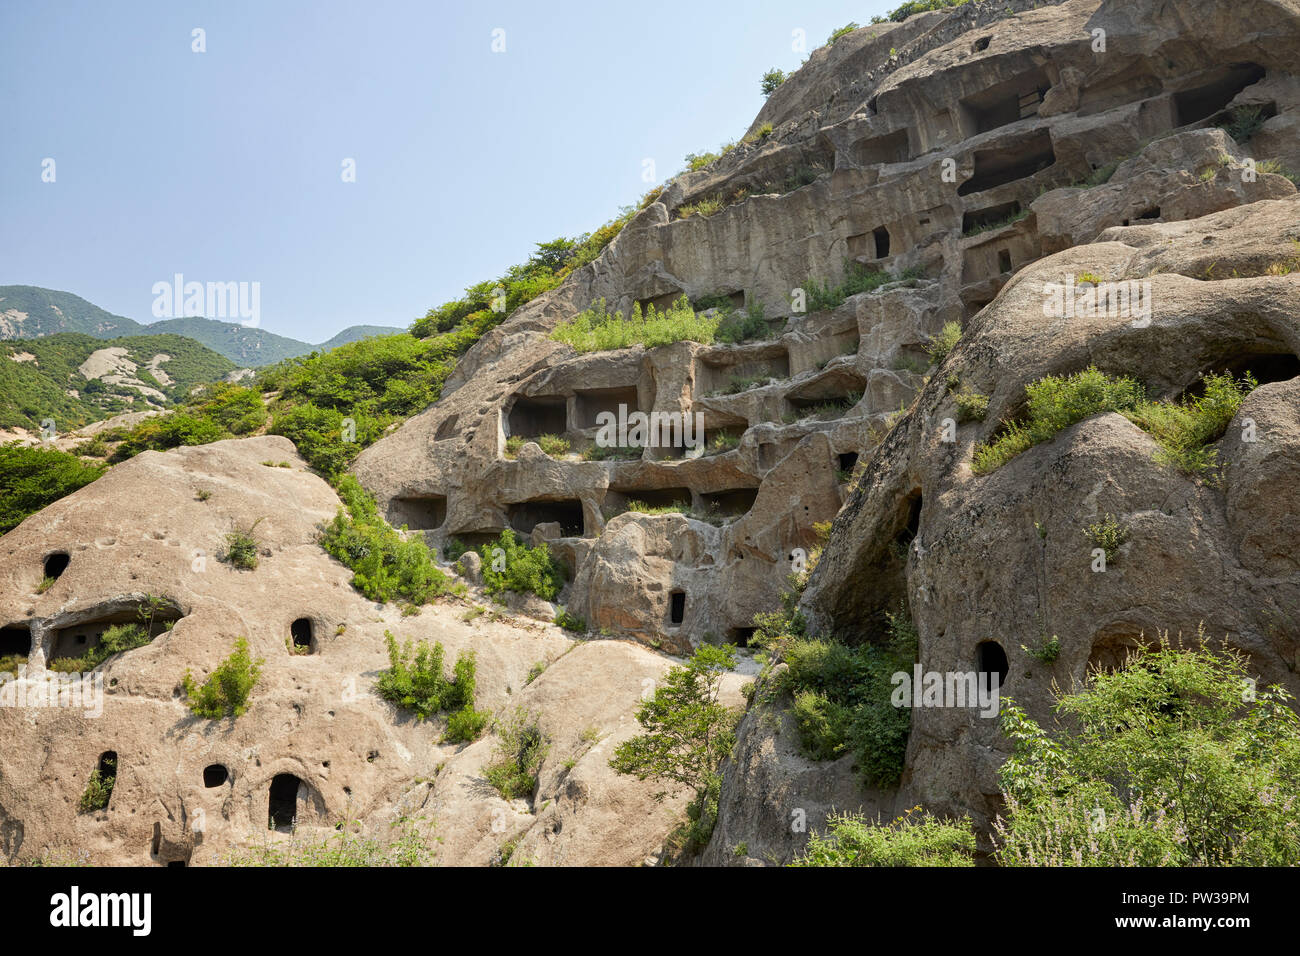 Guyaju cave dwelling Guyaju caves Ancient cave dwellings  Ancient Cliff Dwellings in Yanqing, China, Asia Stock Photo